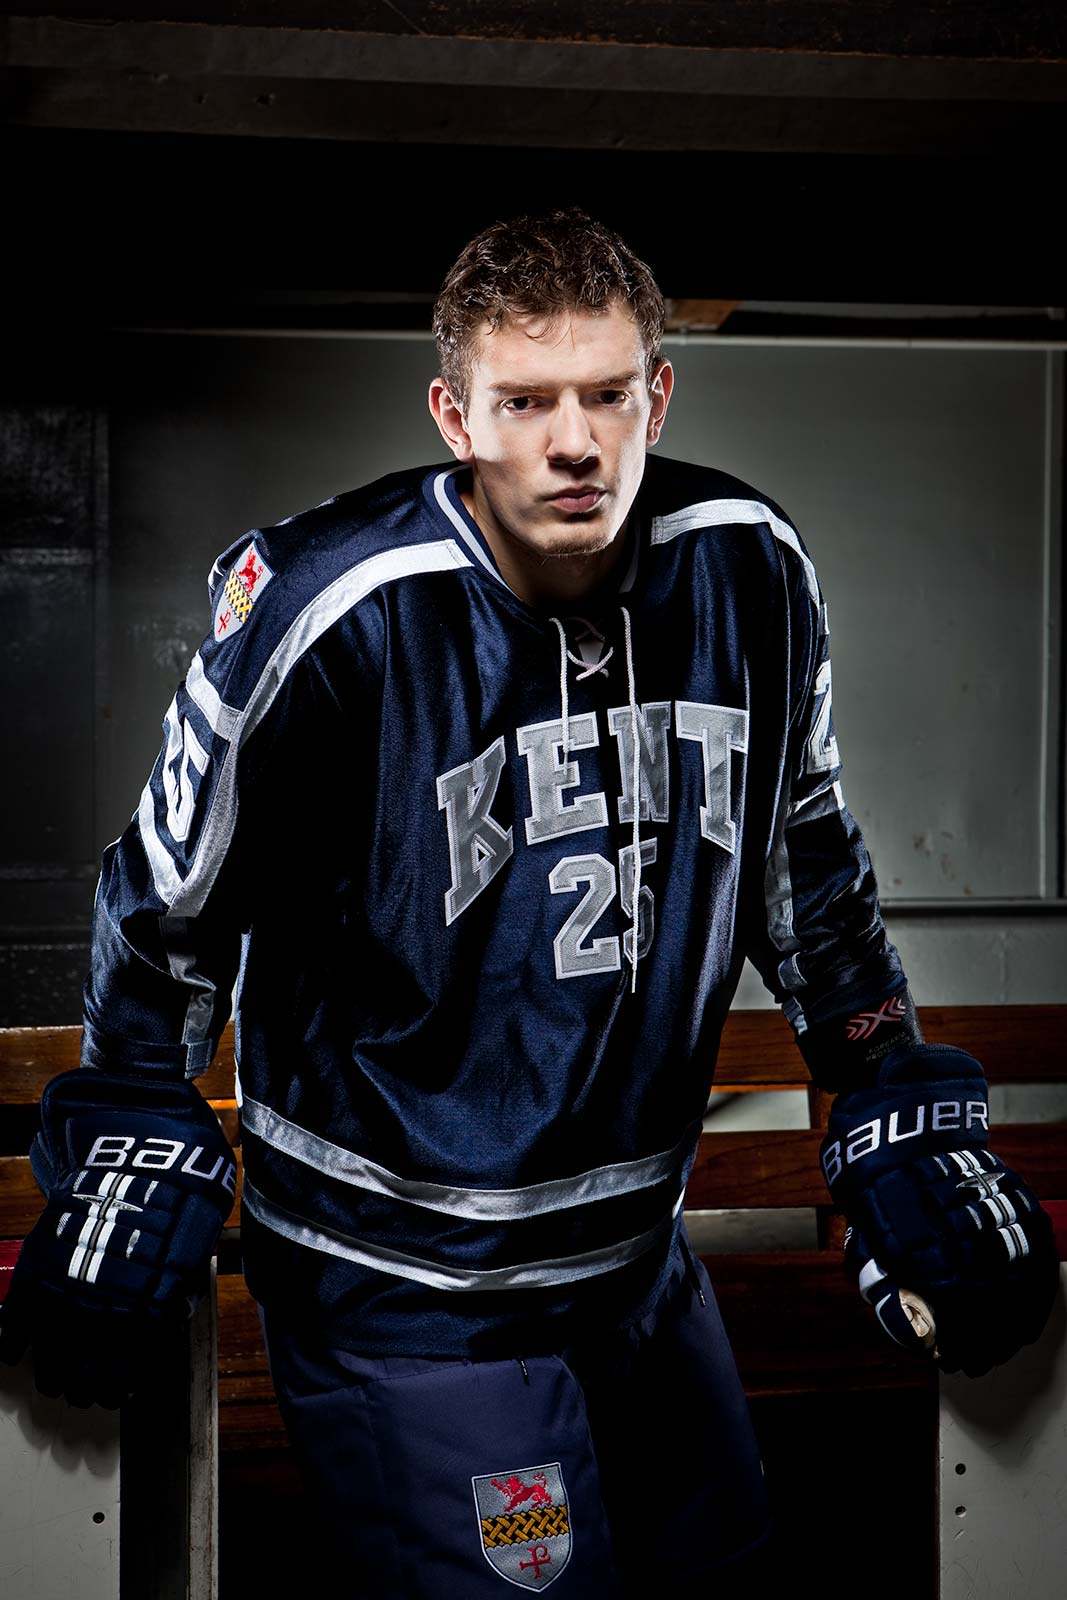 Impactful portrait of a rising hockey star wearing uniform in Hockey rink